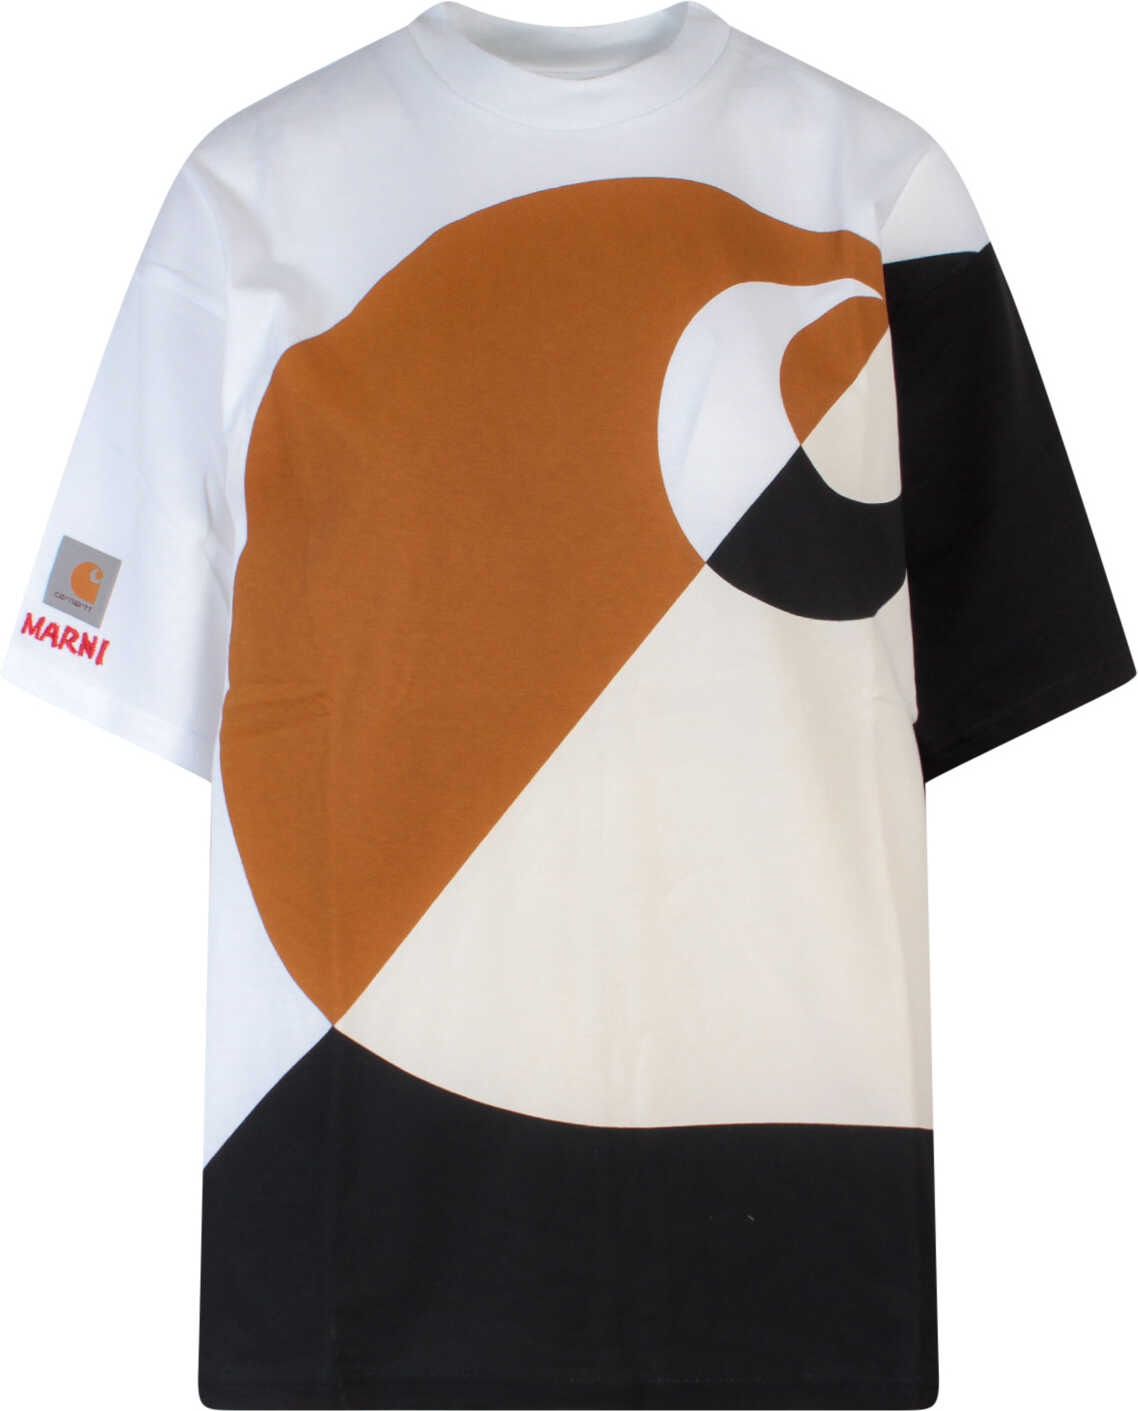 MARNI X CARHARTT WIP T-Shirt Multicolor